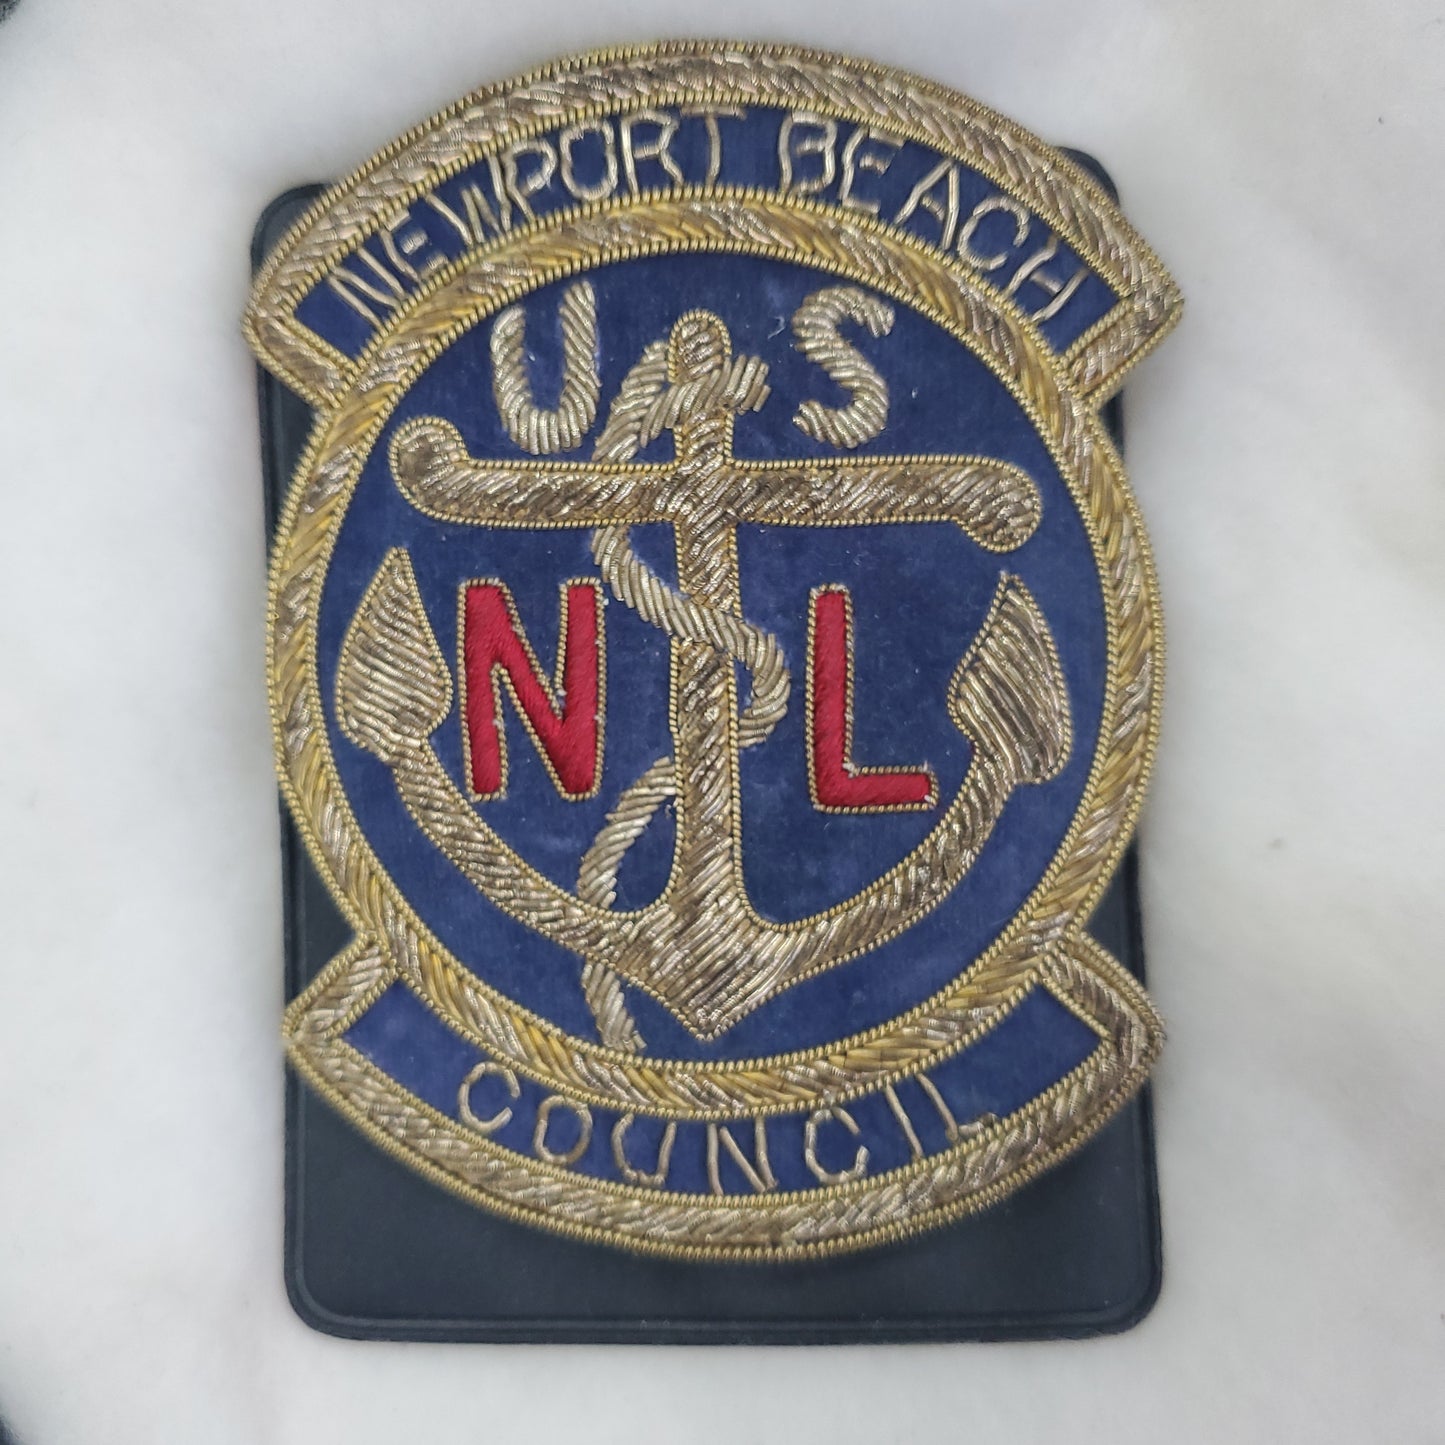 USNL Newport Beach Council Bullion and Velvet Patch (C8)